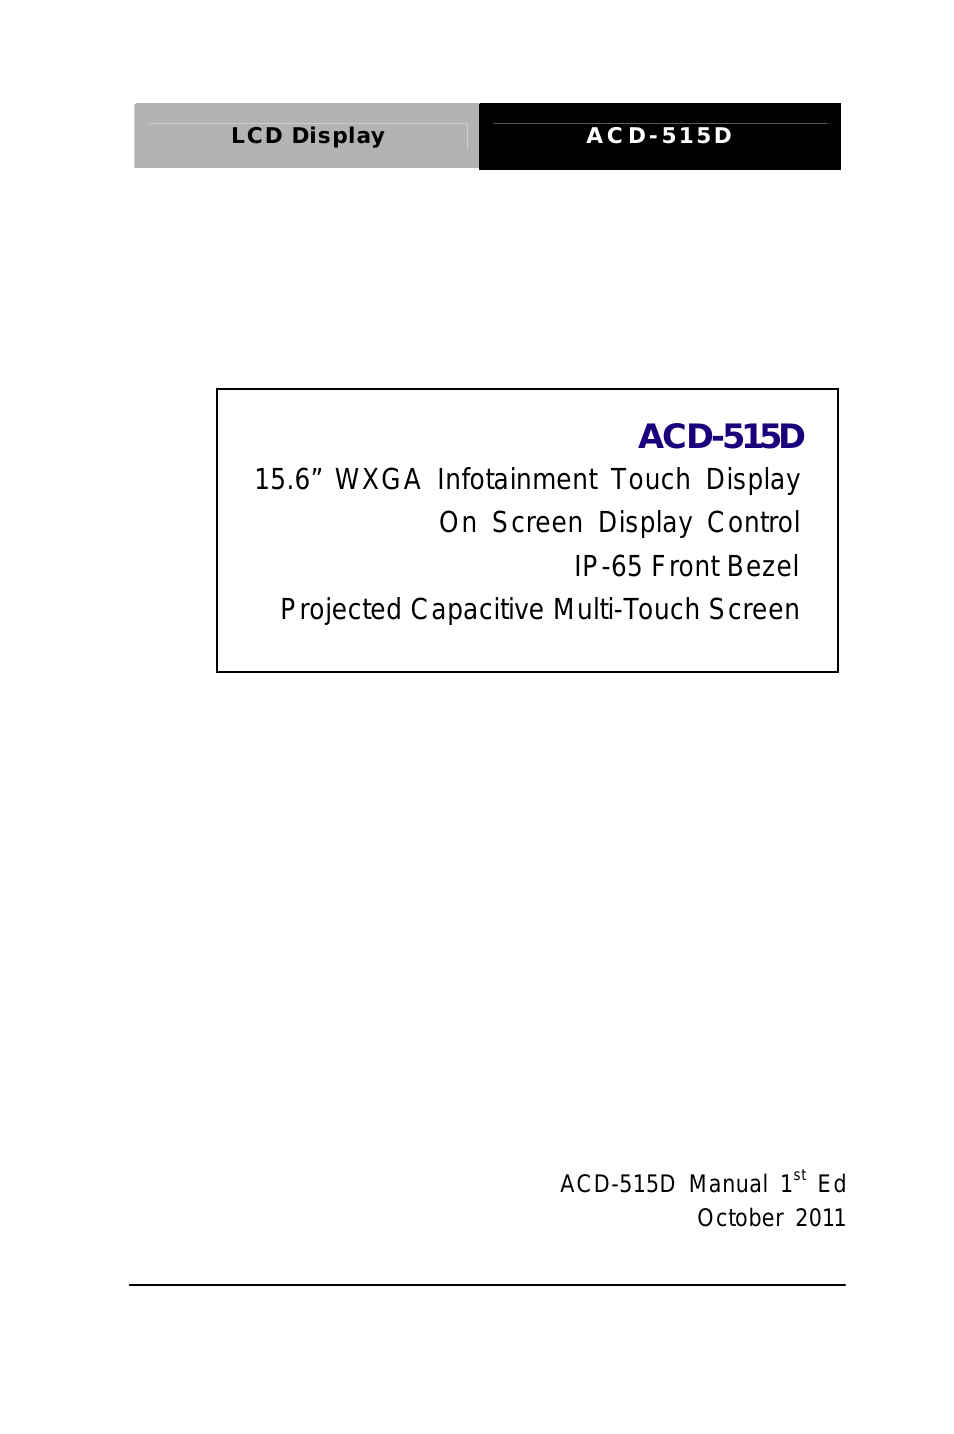 ACD-515D